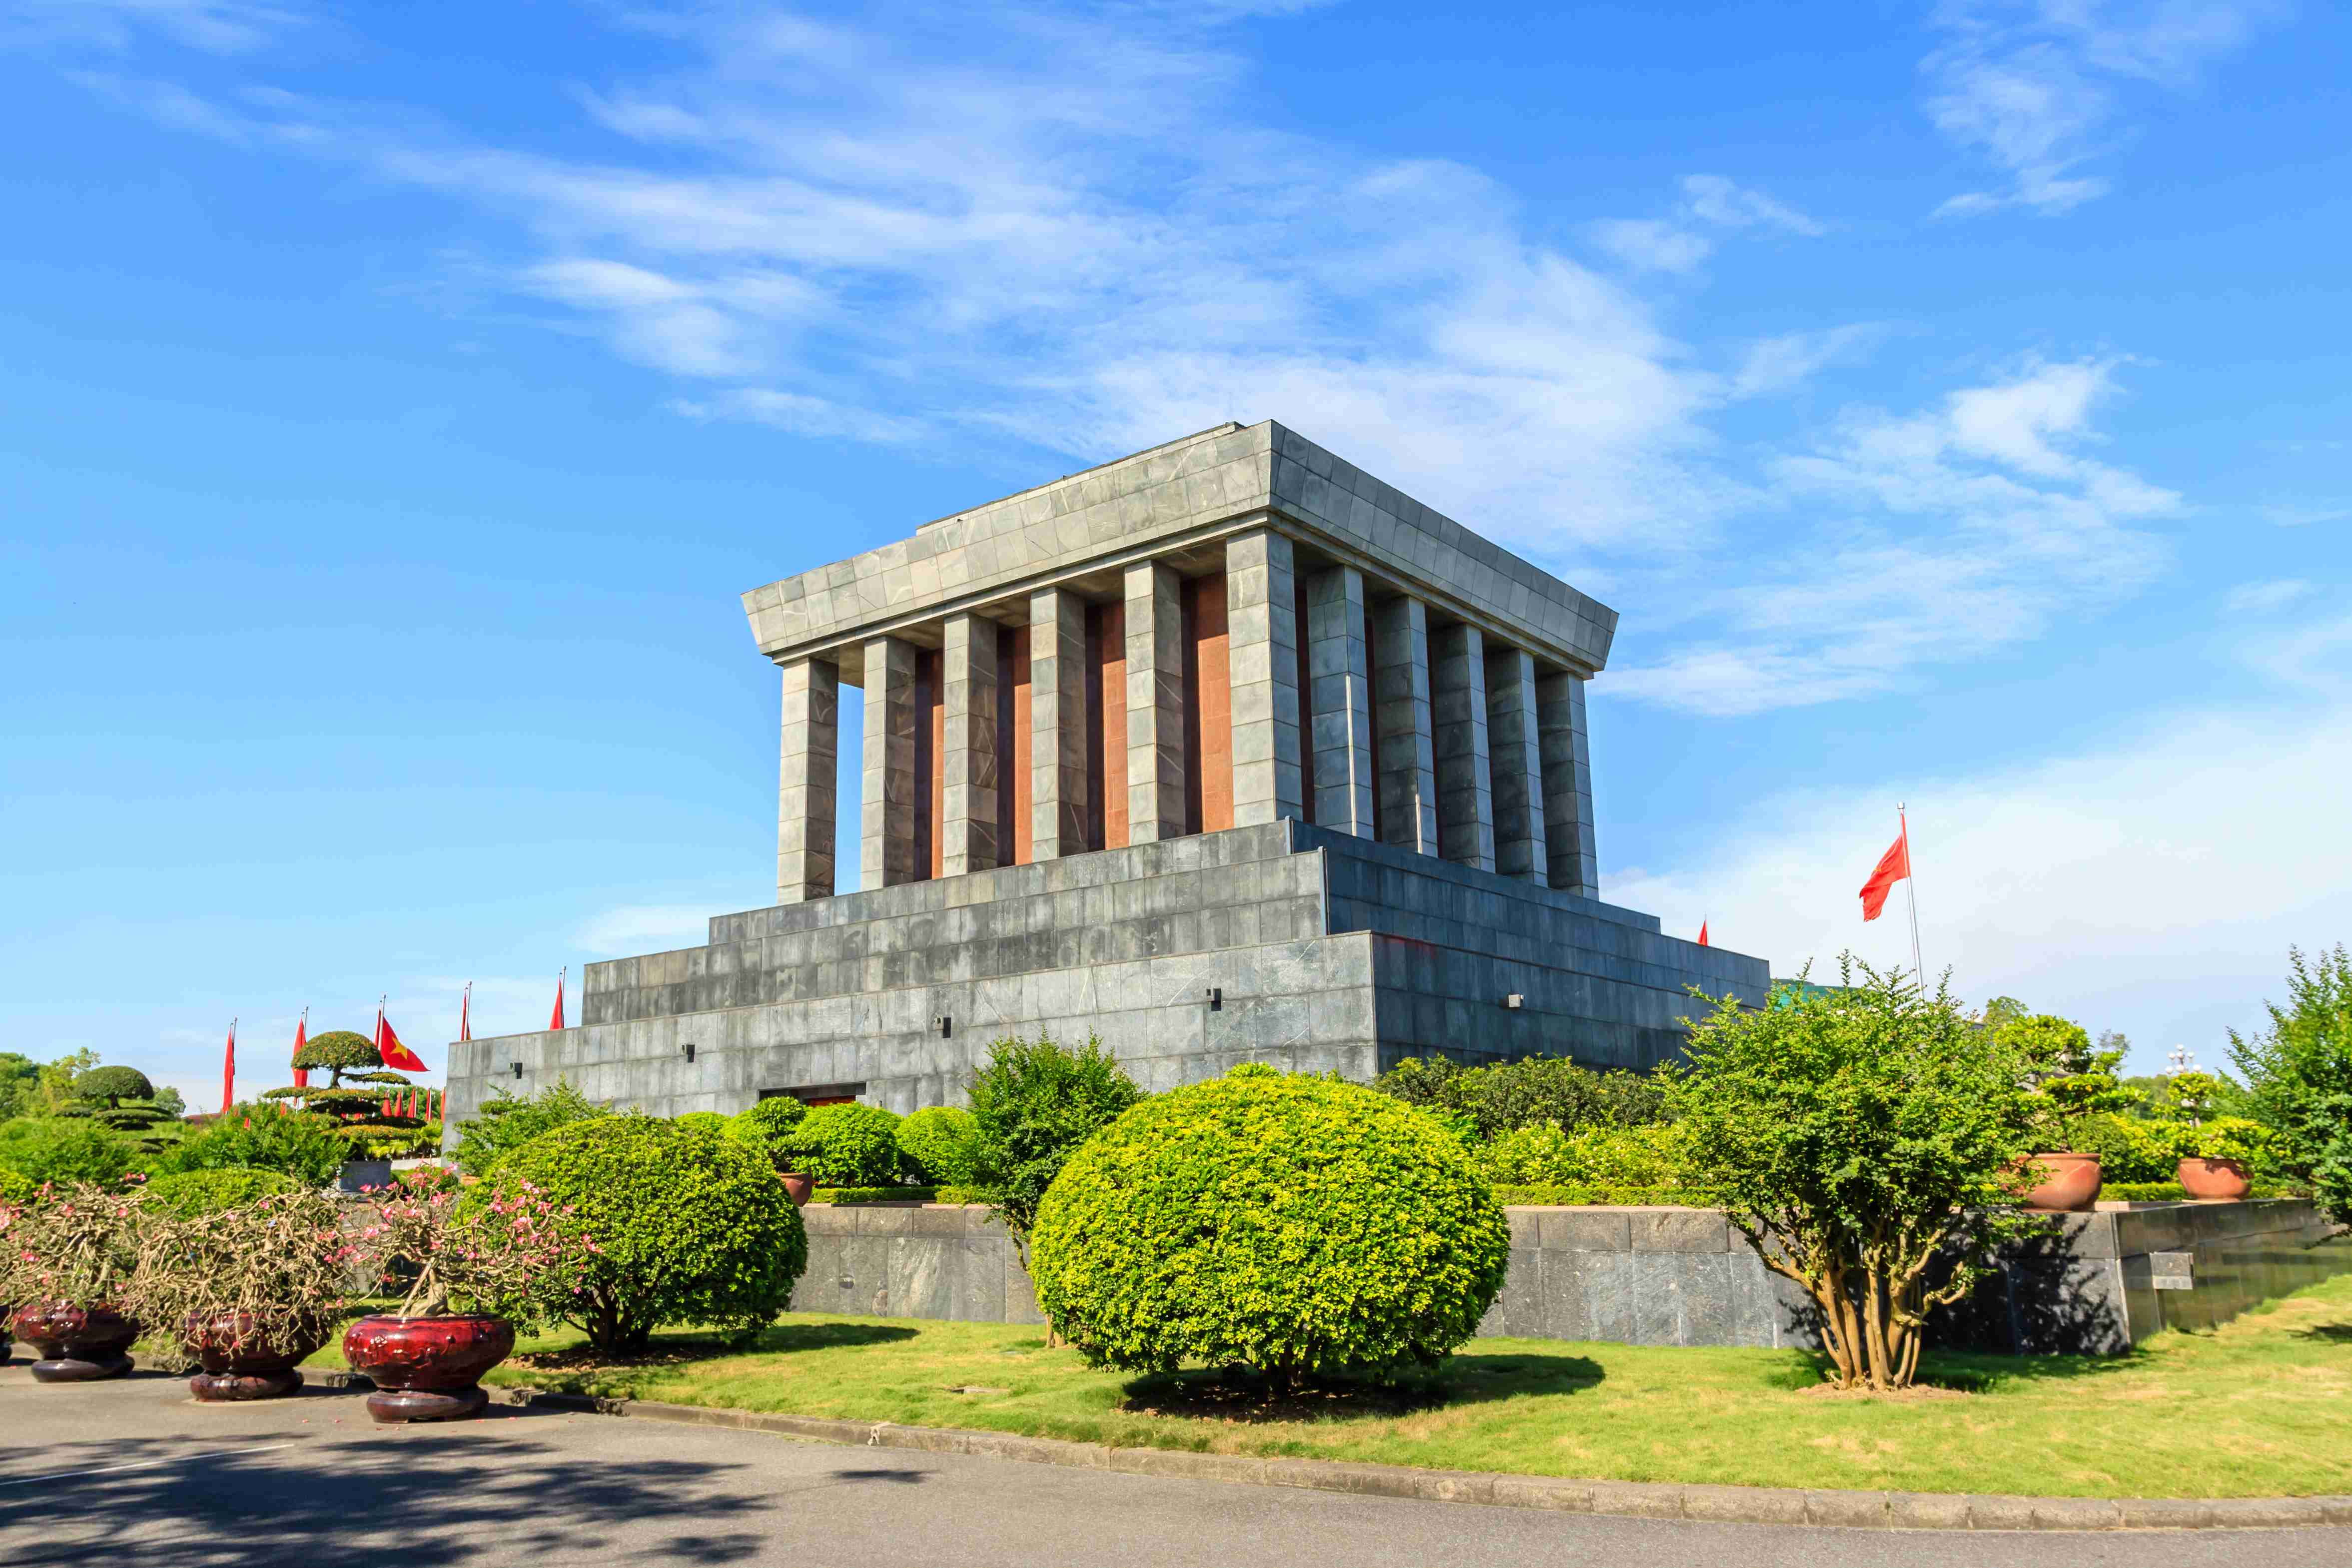 Ho Chi Minh’s Mausoleum